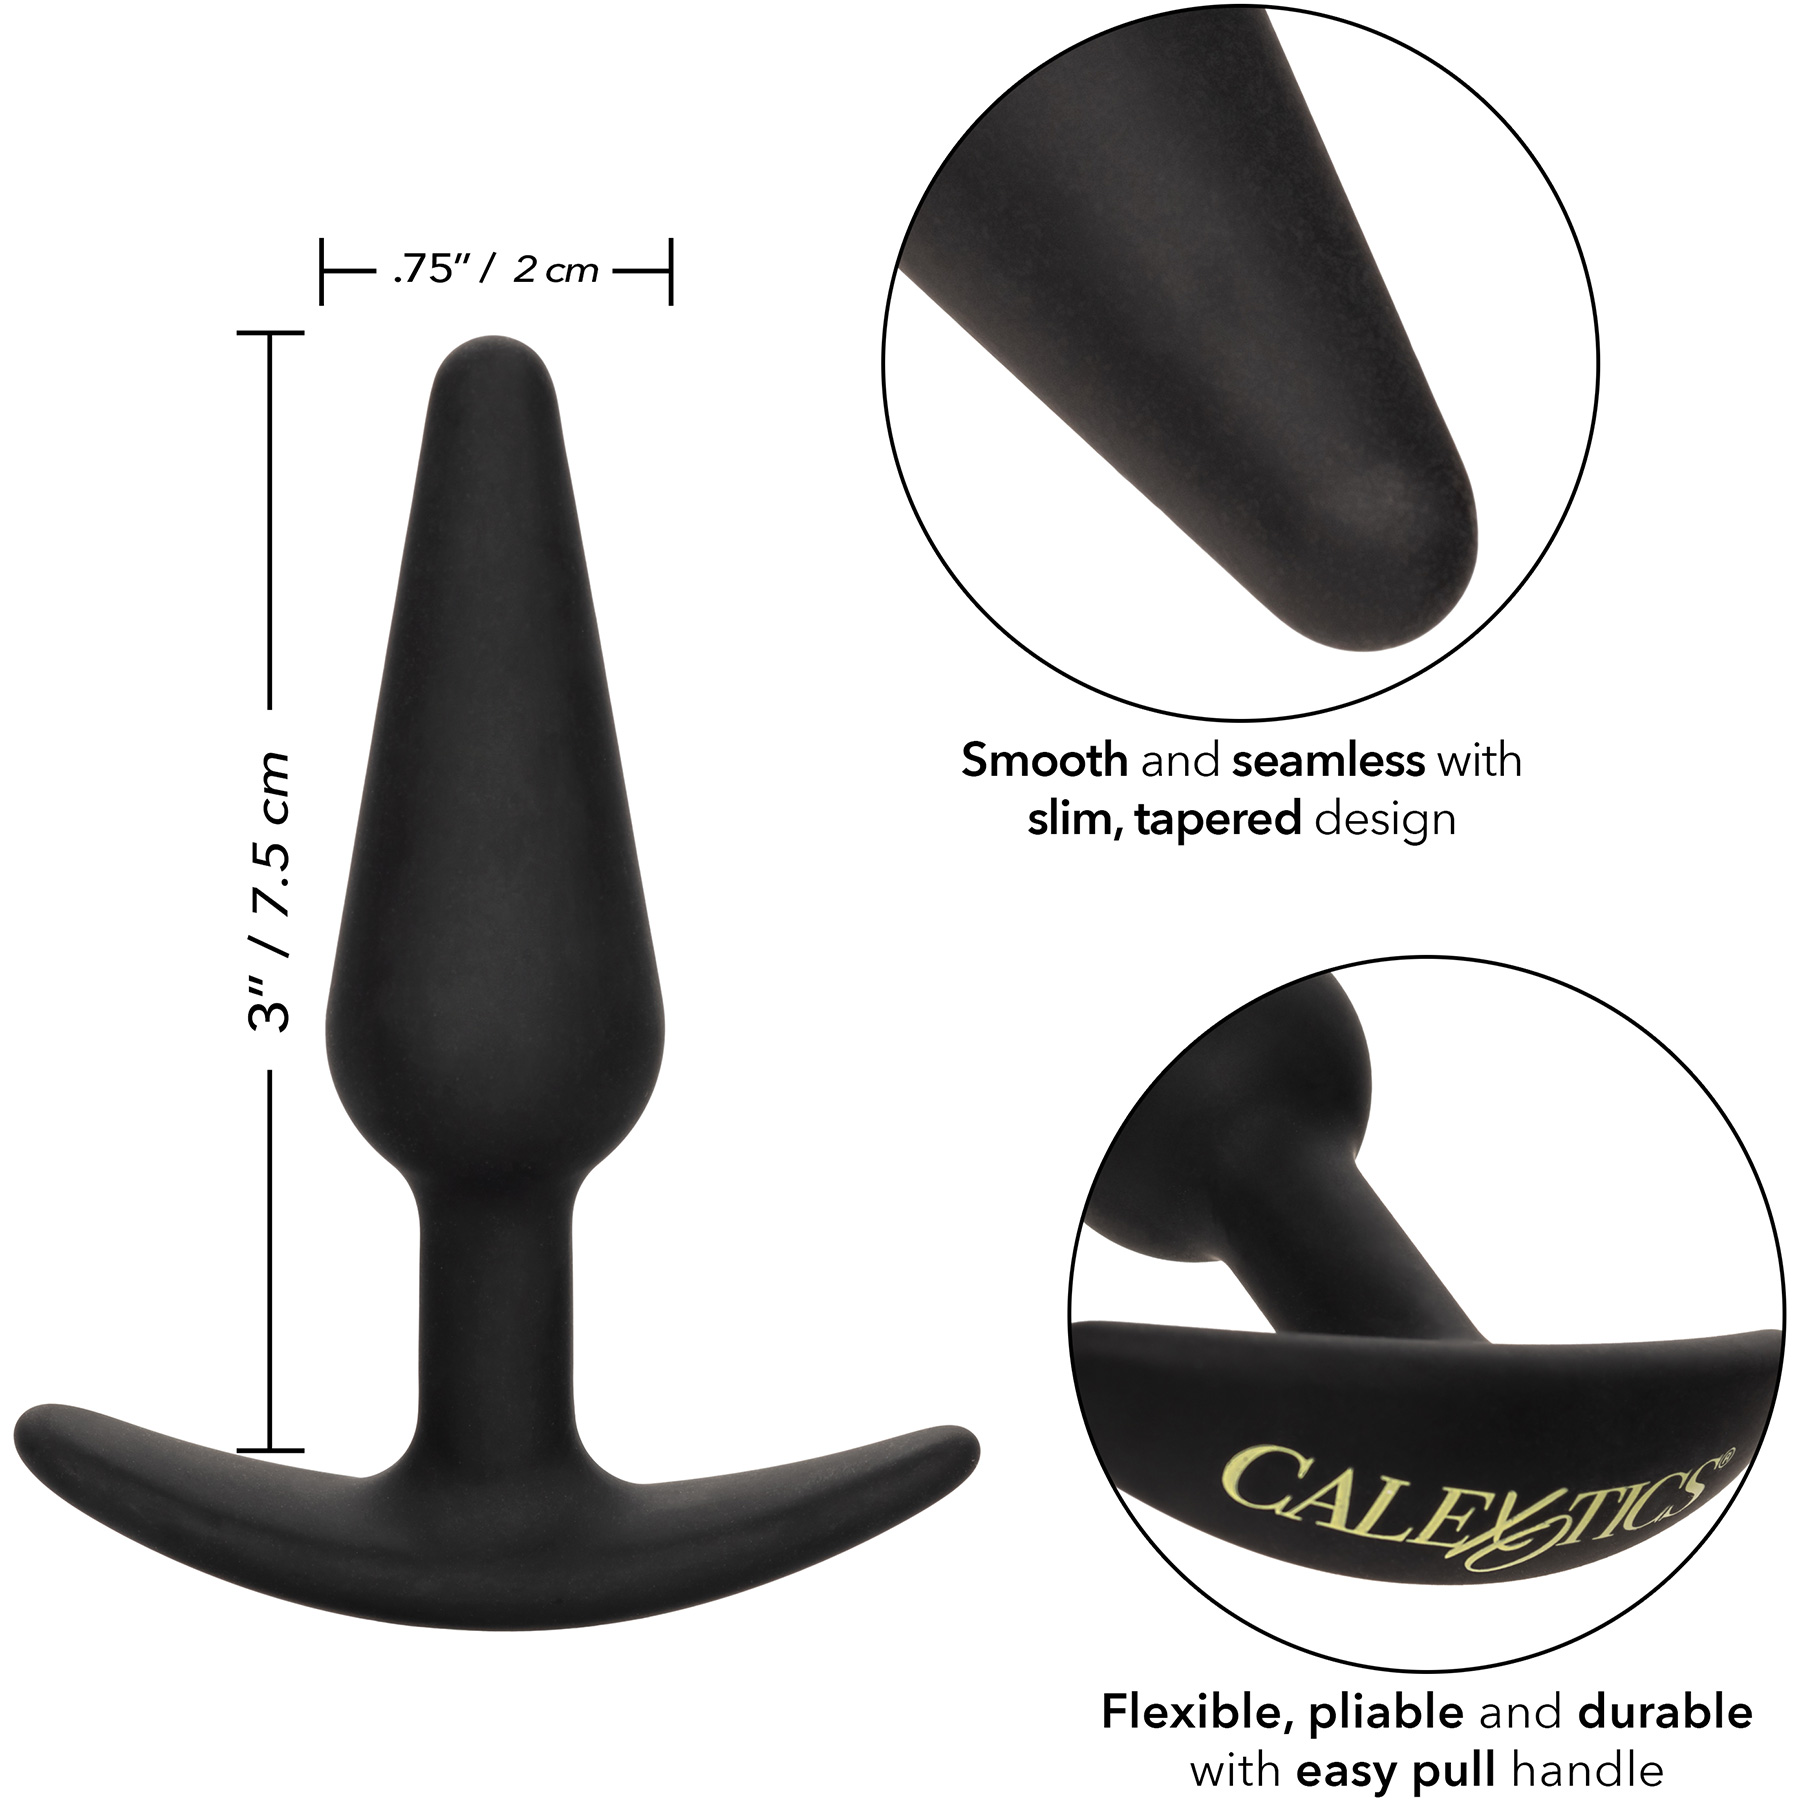 Boundless Slim Plug Silicone Butt Plug By CalExotics - Measurements Graphic